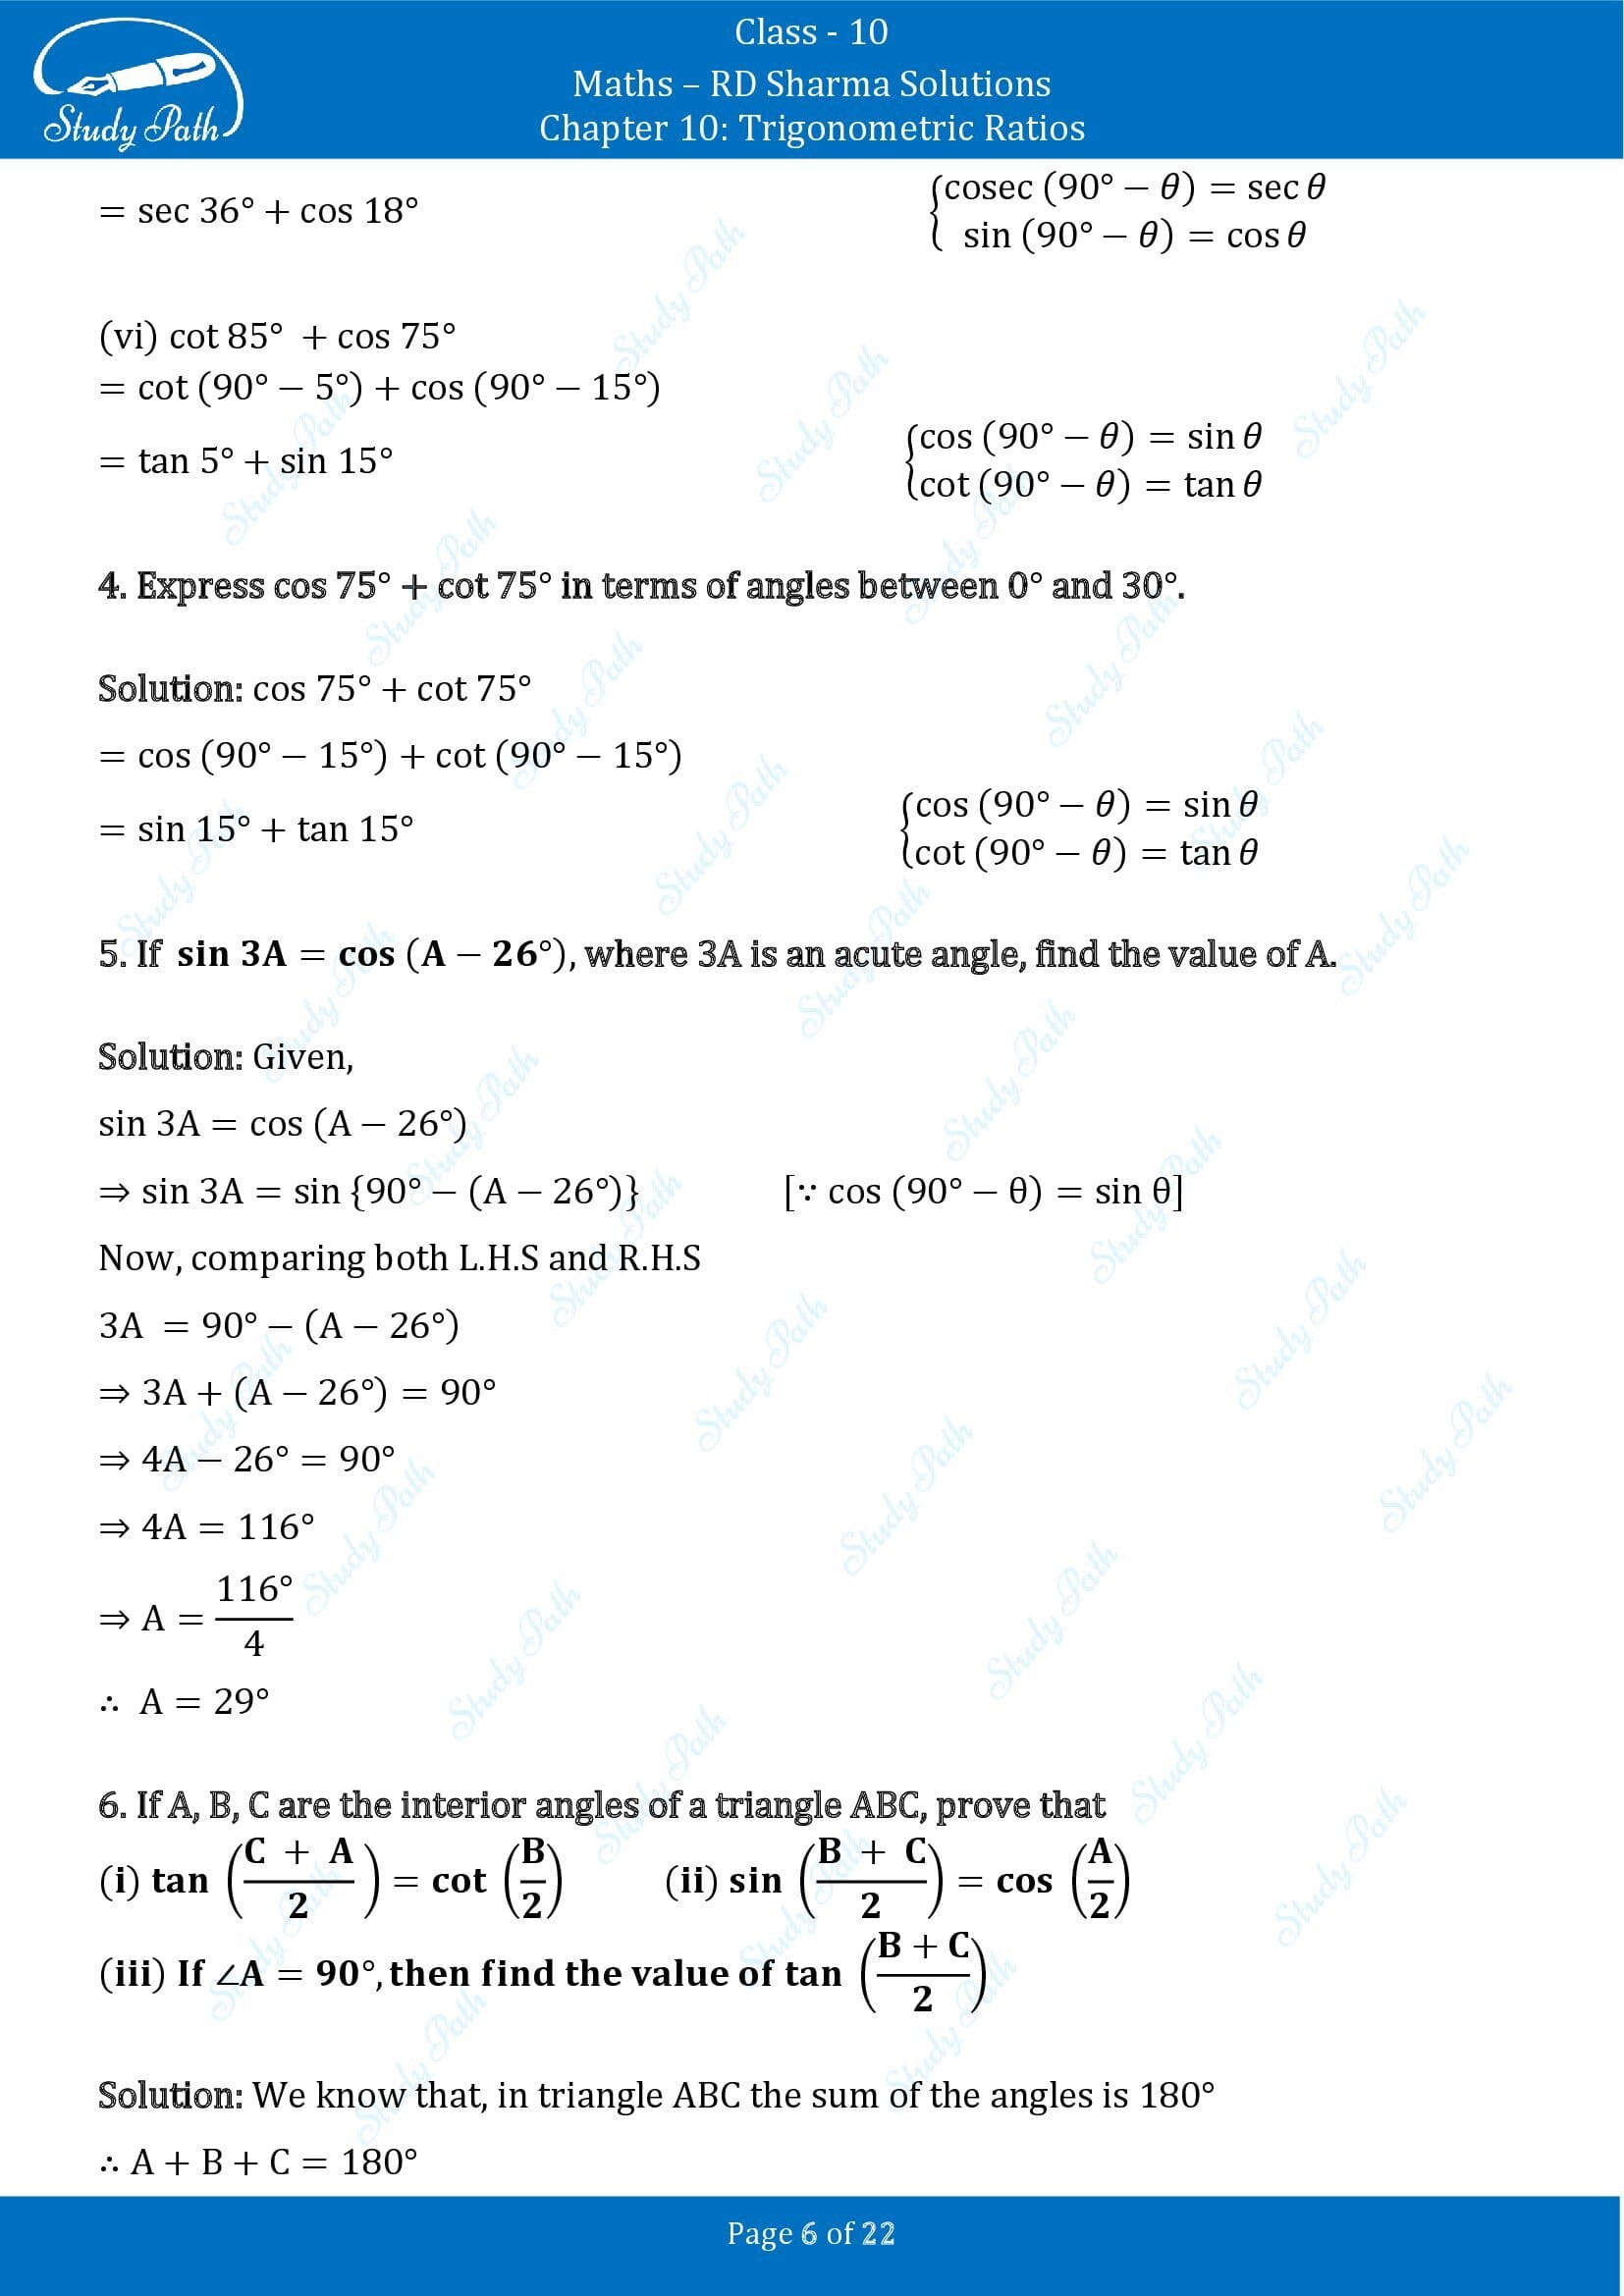 RD Sharma Solutions Class 10 Chapter 10 Trigonometric Ratios Exercise 10.3 00006